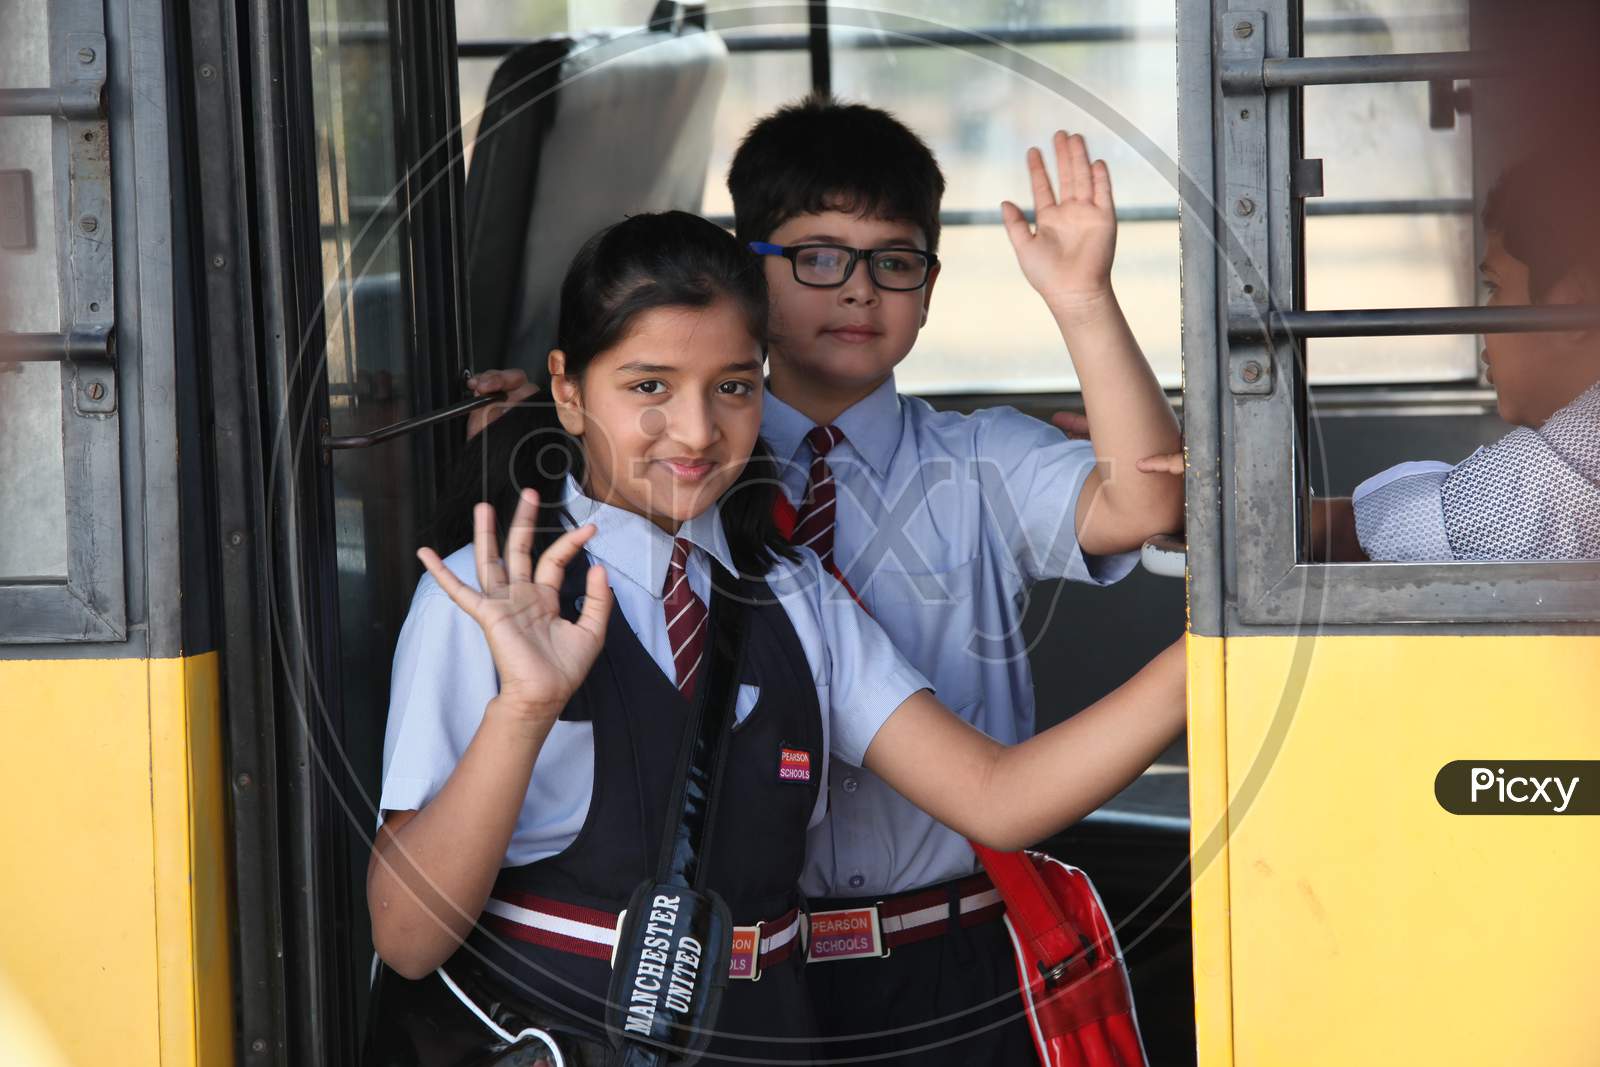 School Students Boarding a School Bus